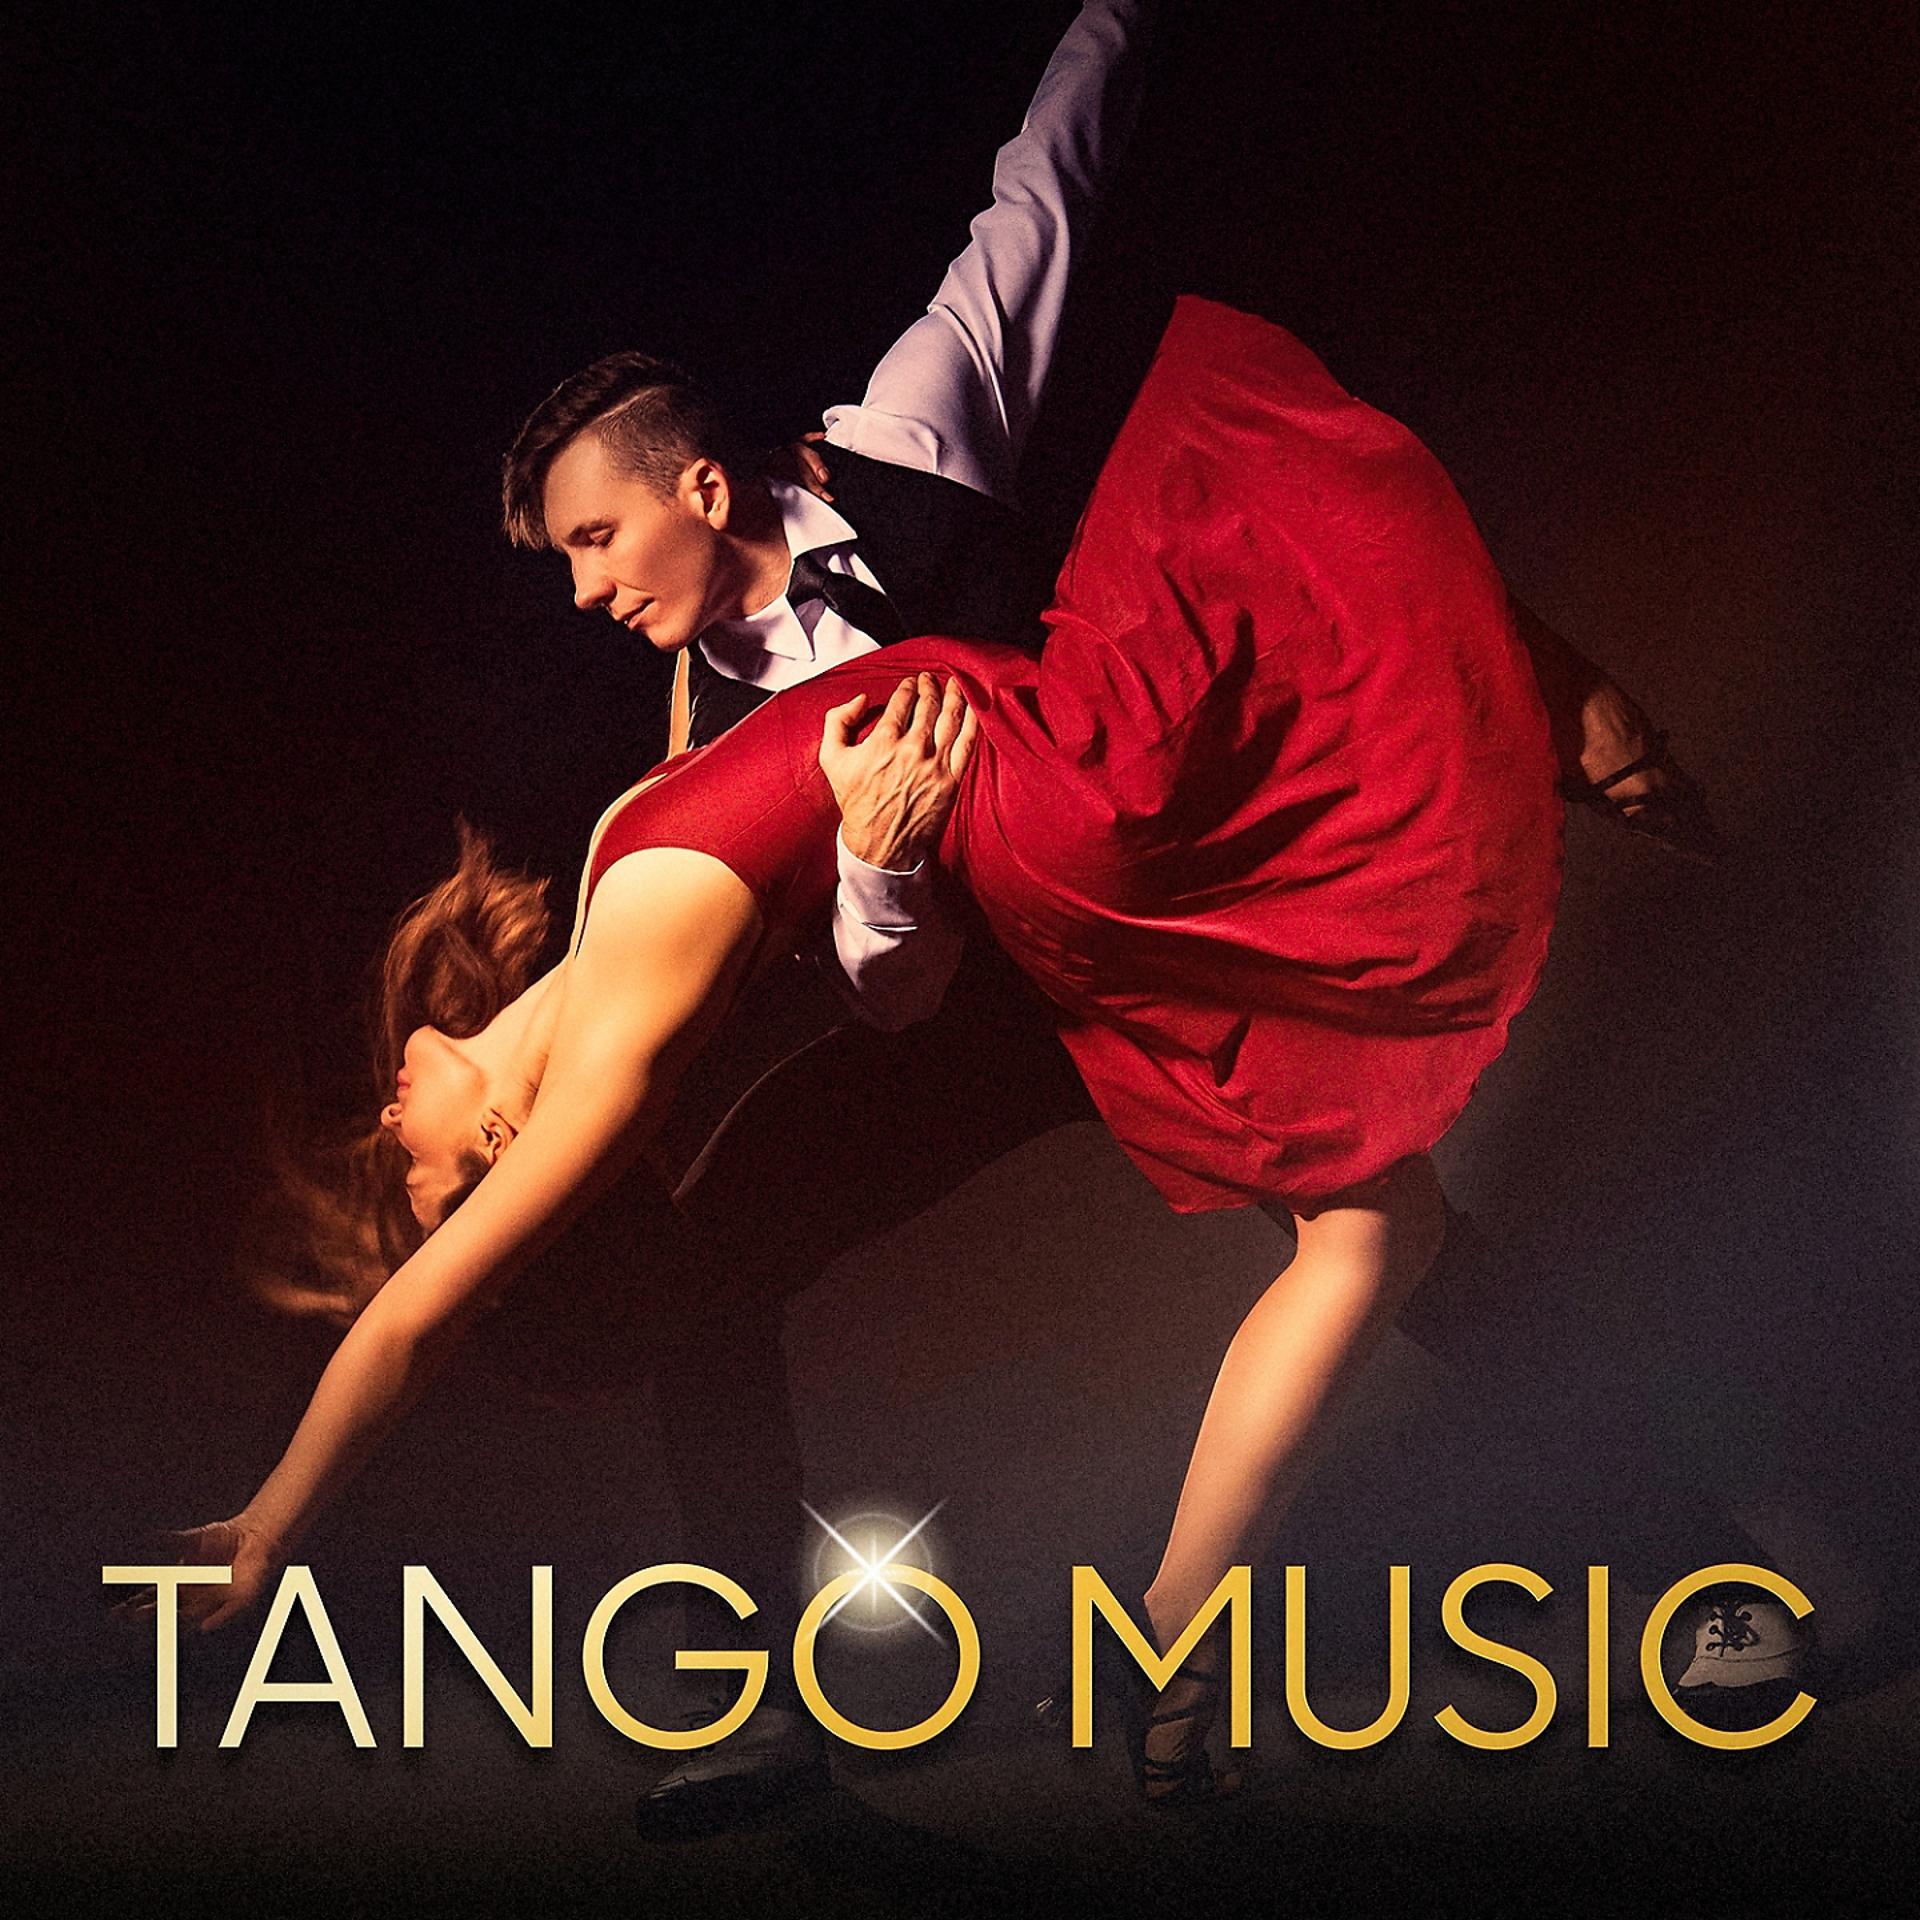 Tango orchestra